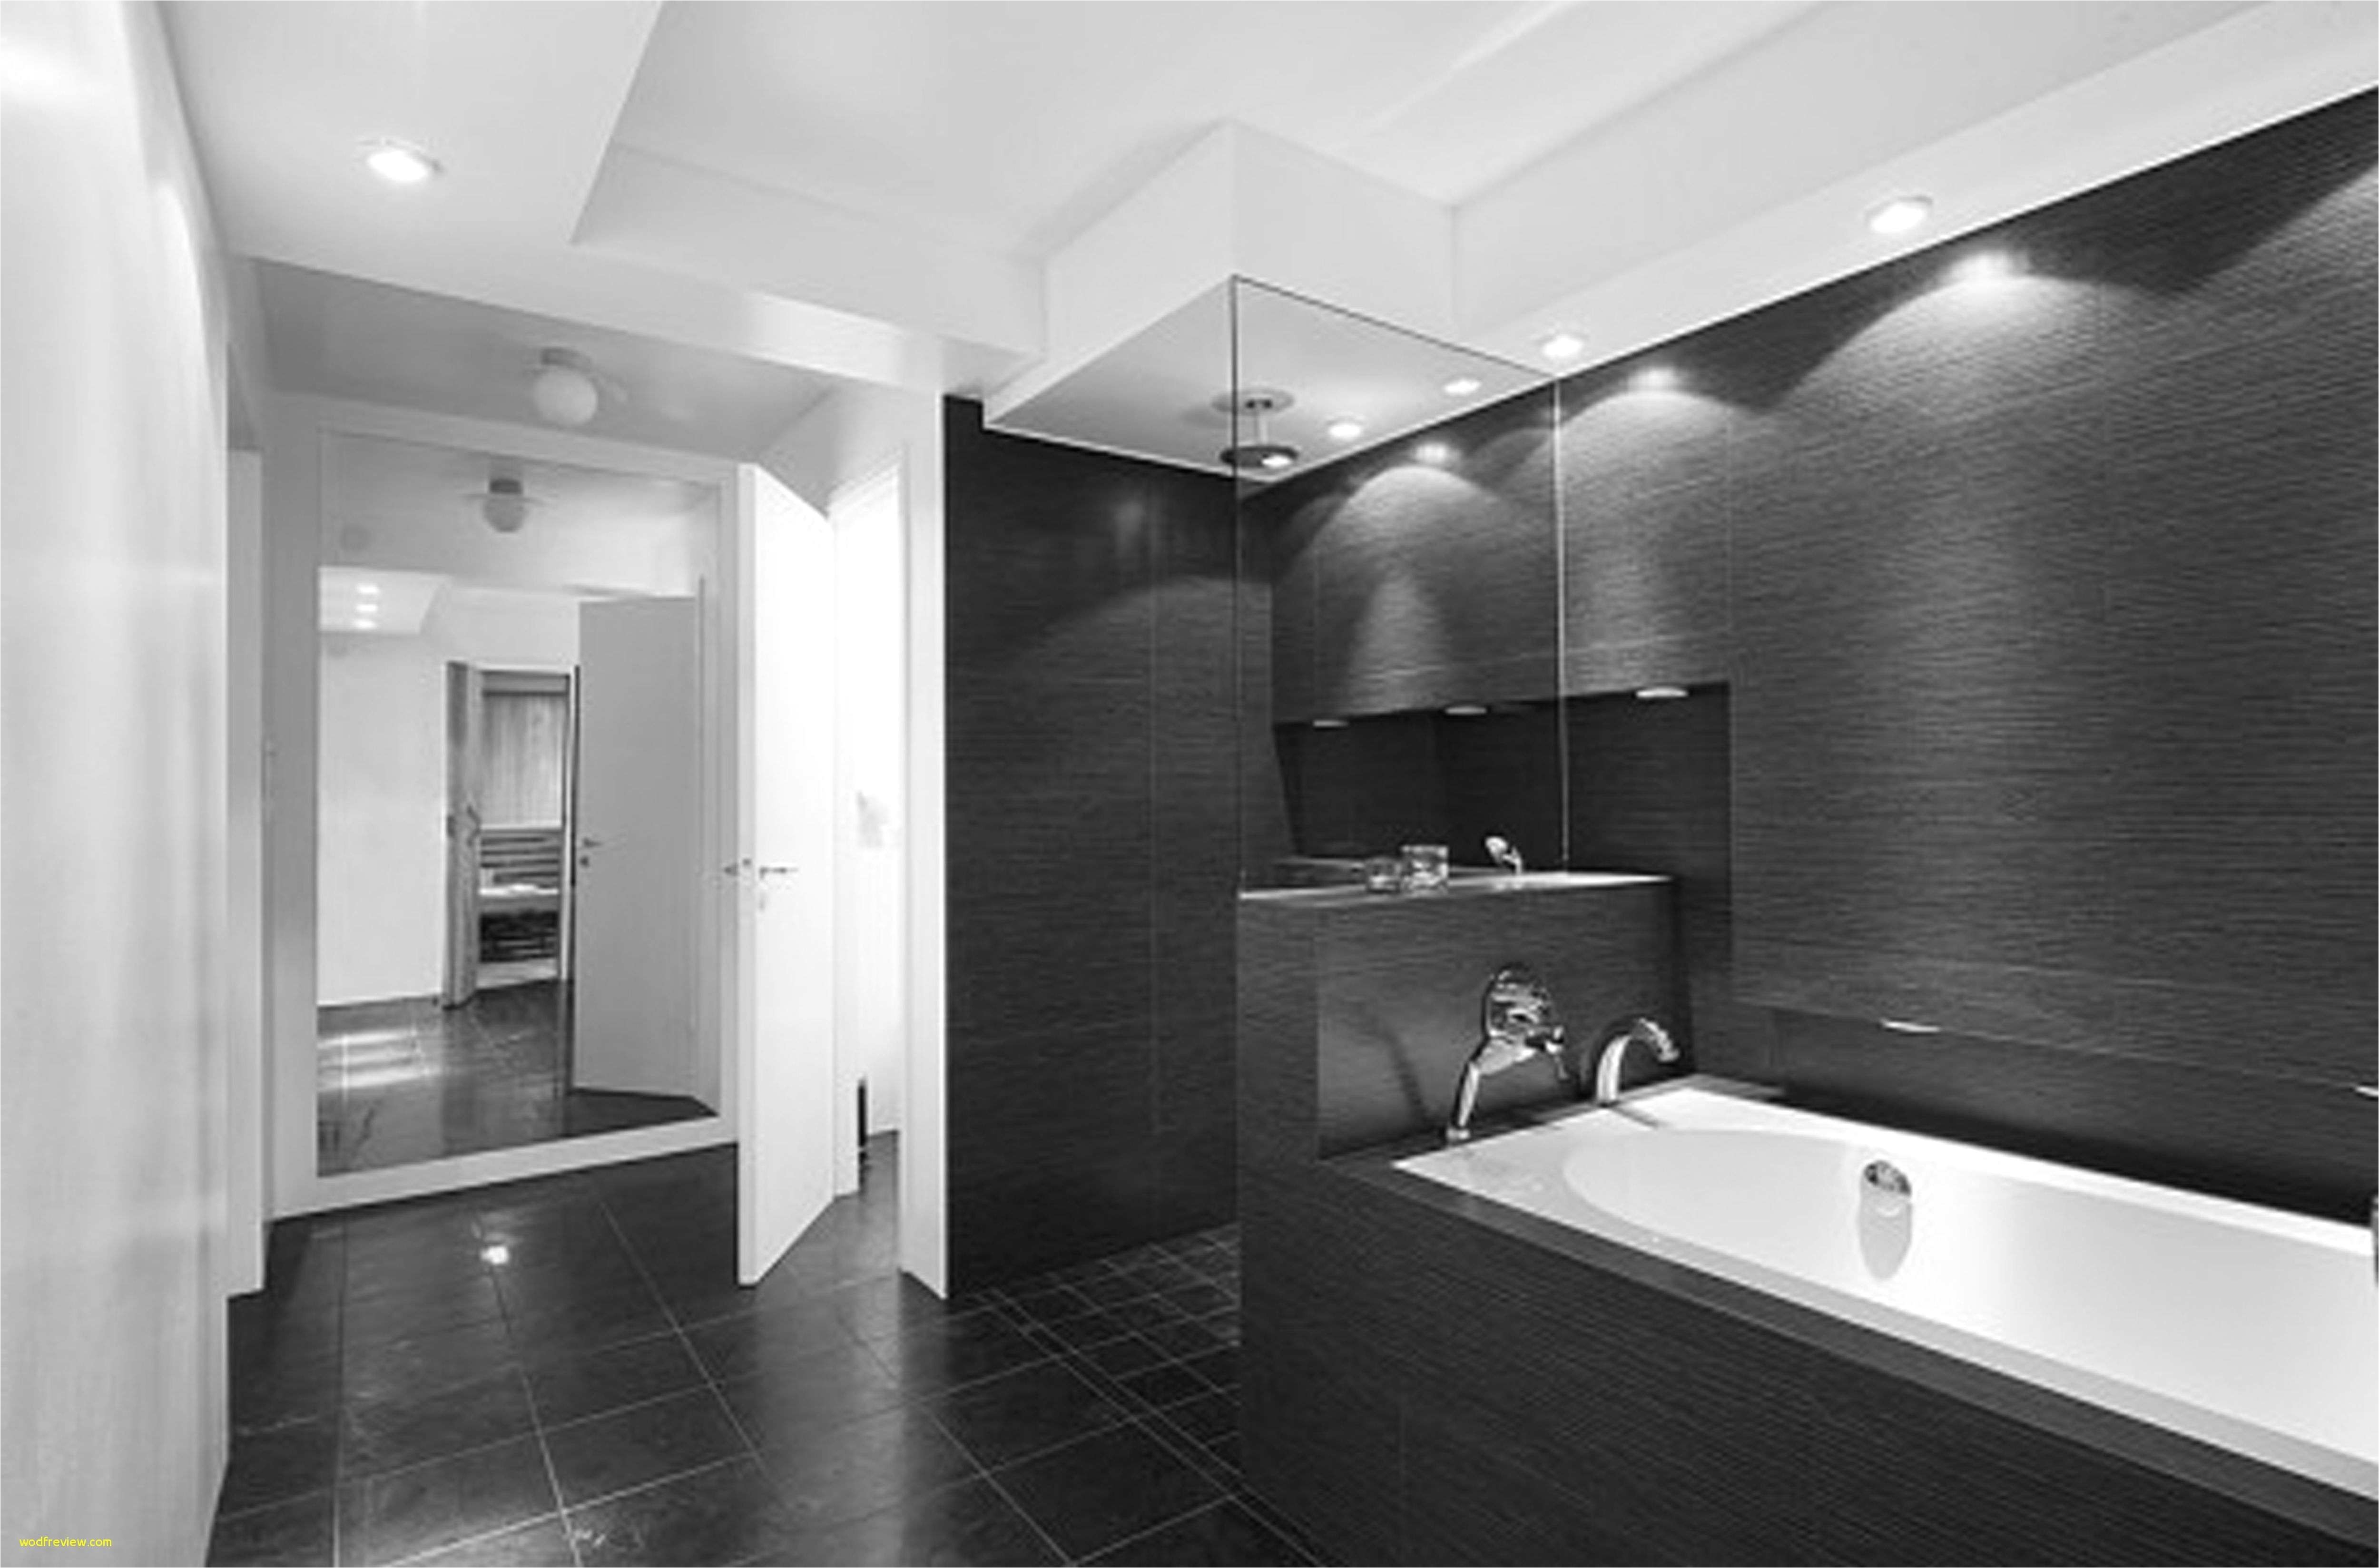 Graceful Bathroom Ideas with Bathroom Countertop Designs Fresh Bathroom Elegant Ideas 0d